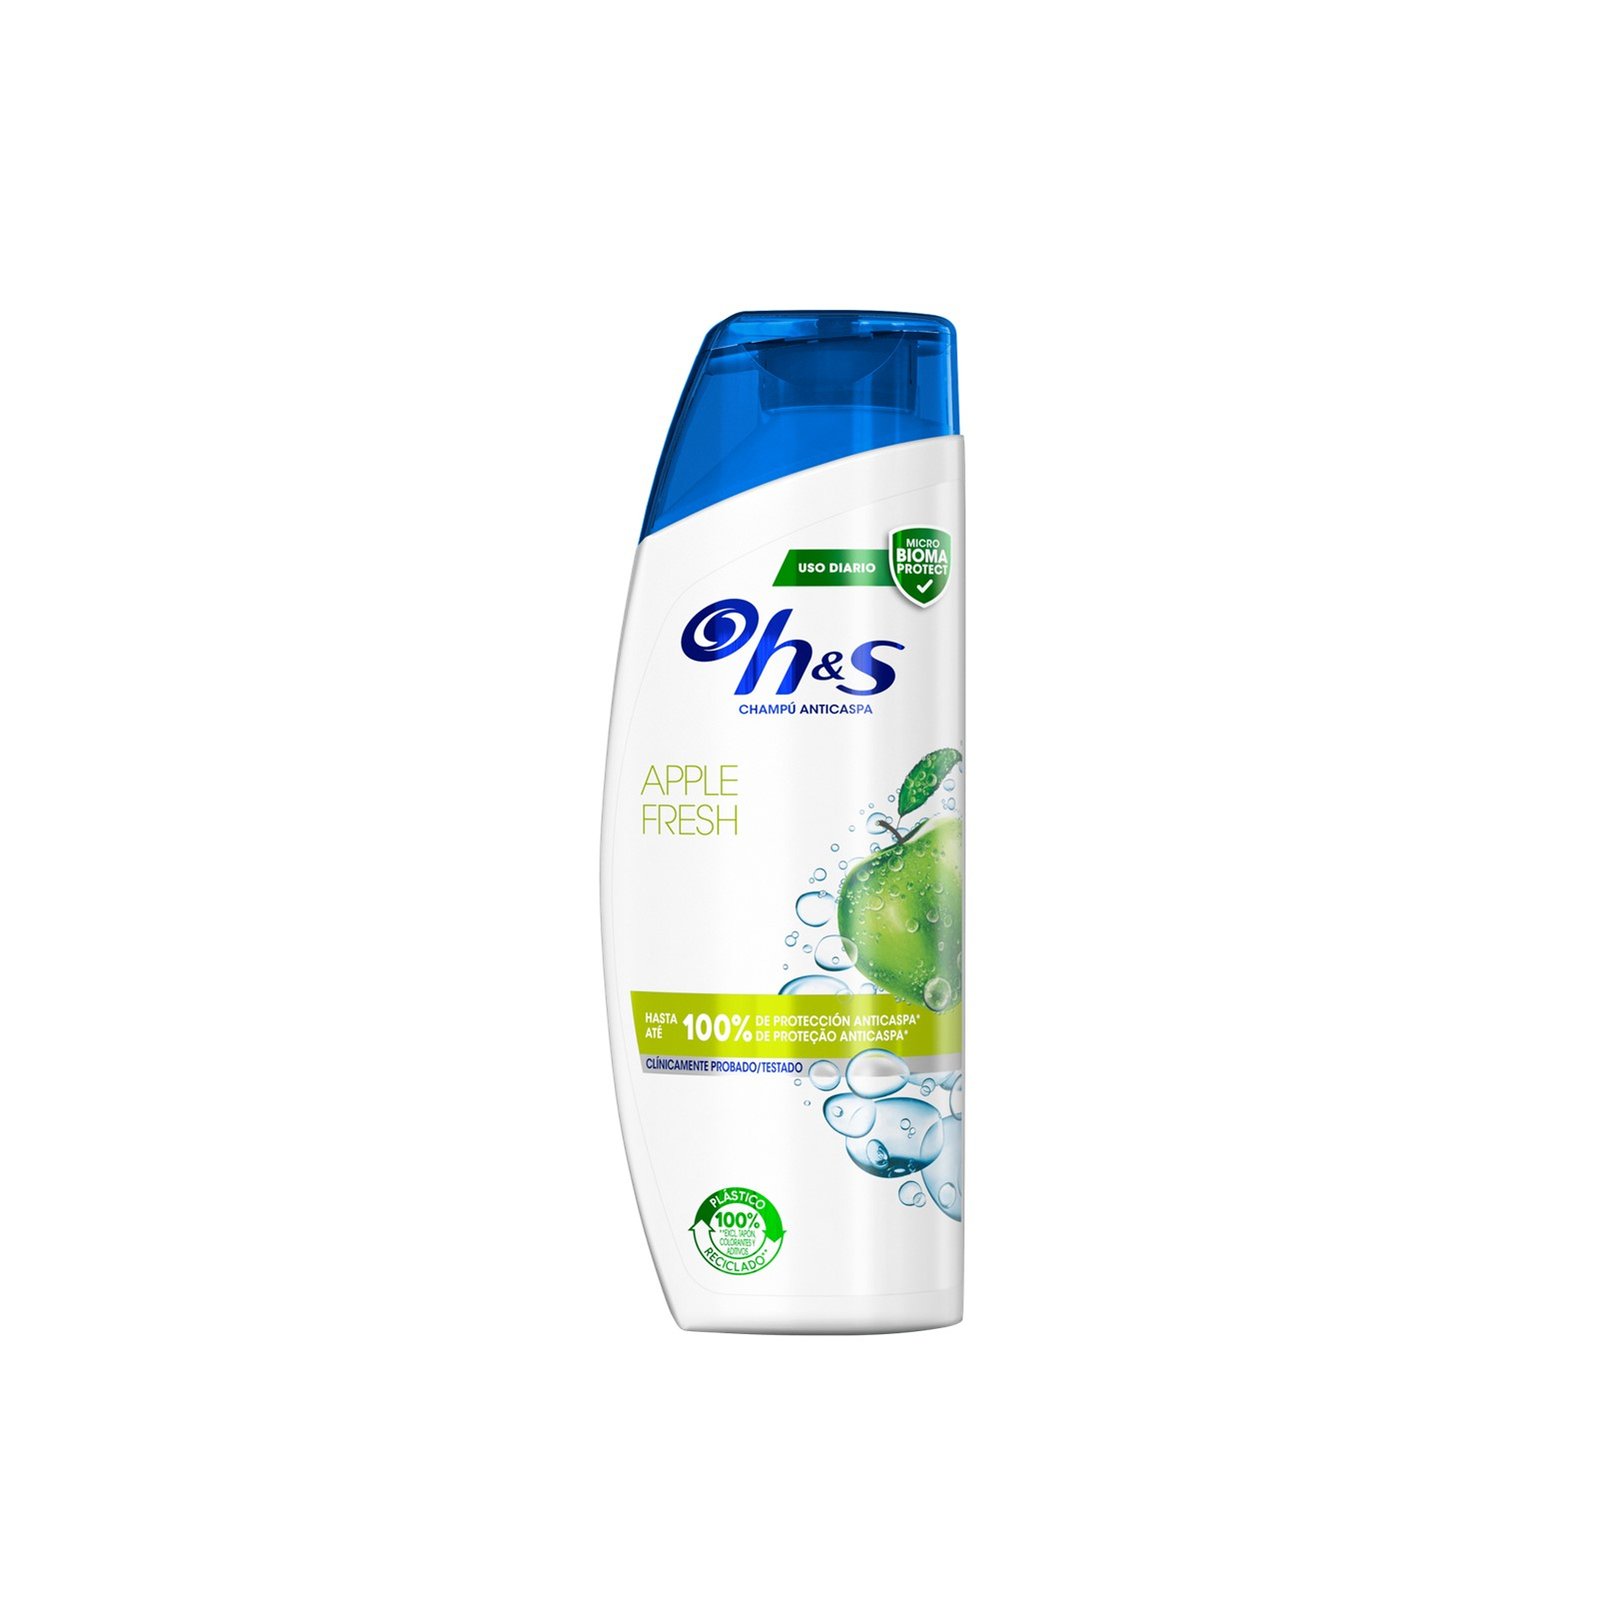 H&S Apple Fresh Shampoo 230ml (7.7 fl oz)